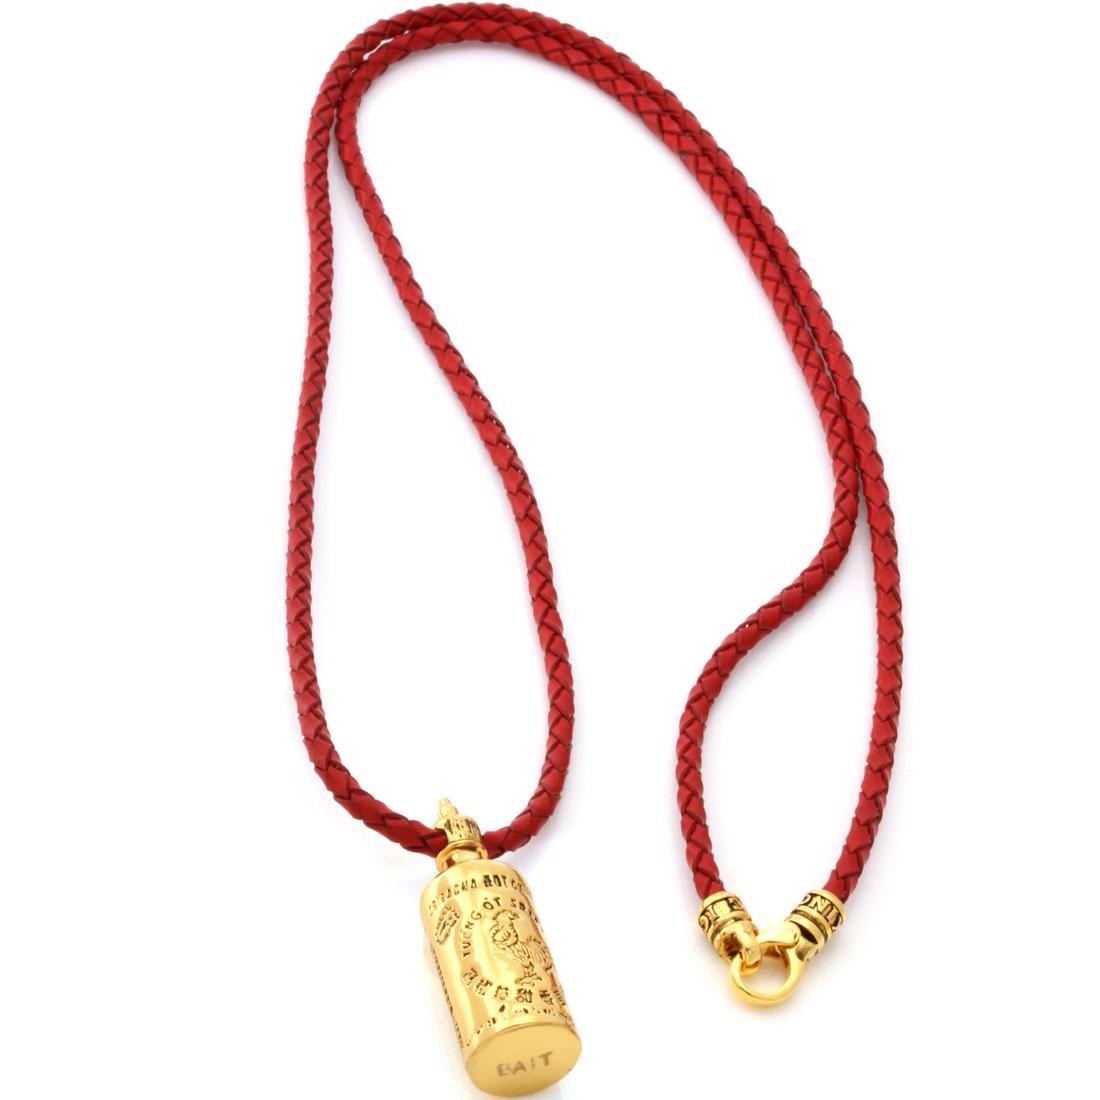 BAIT Sriracha Necklace gold 